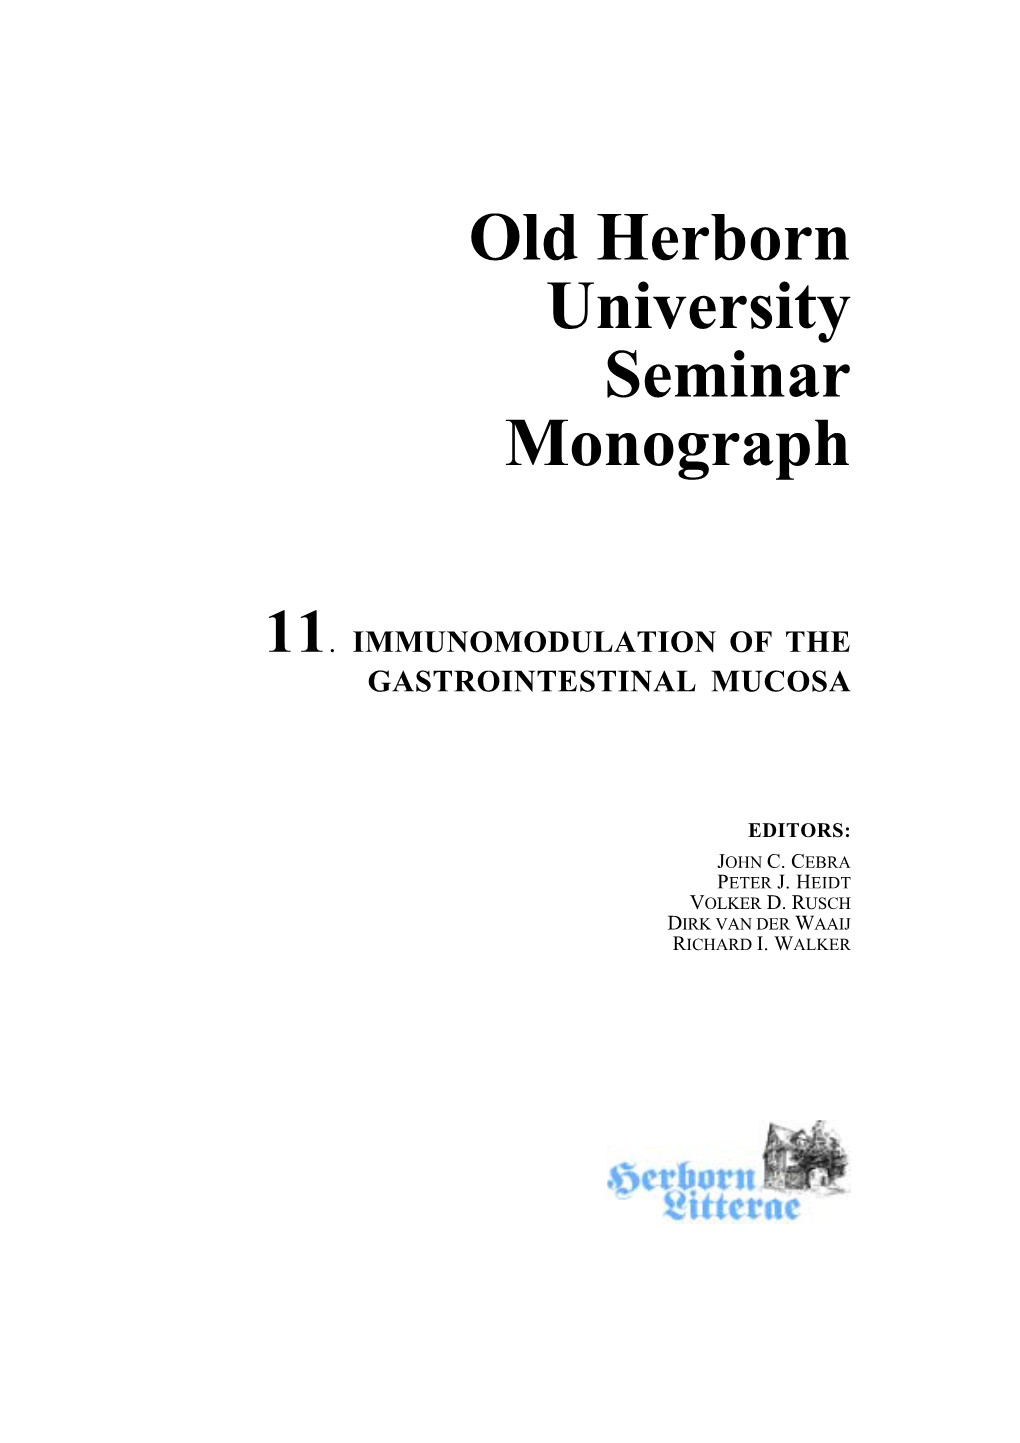 Old Herborn University Monograph 11